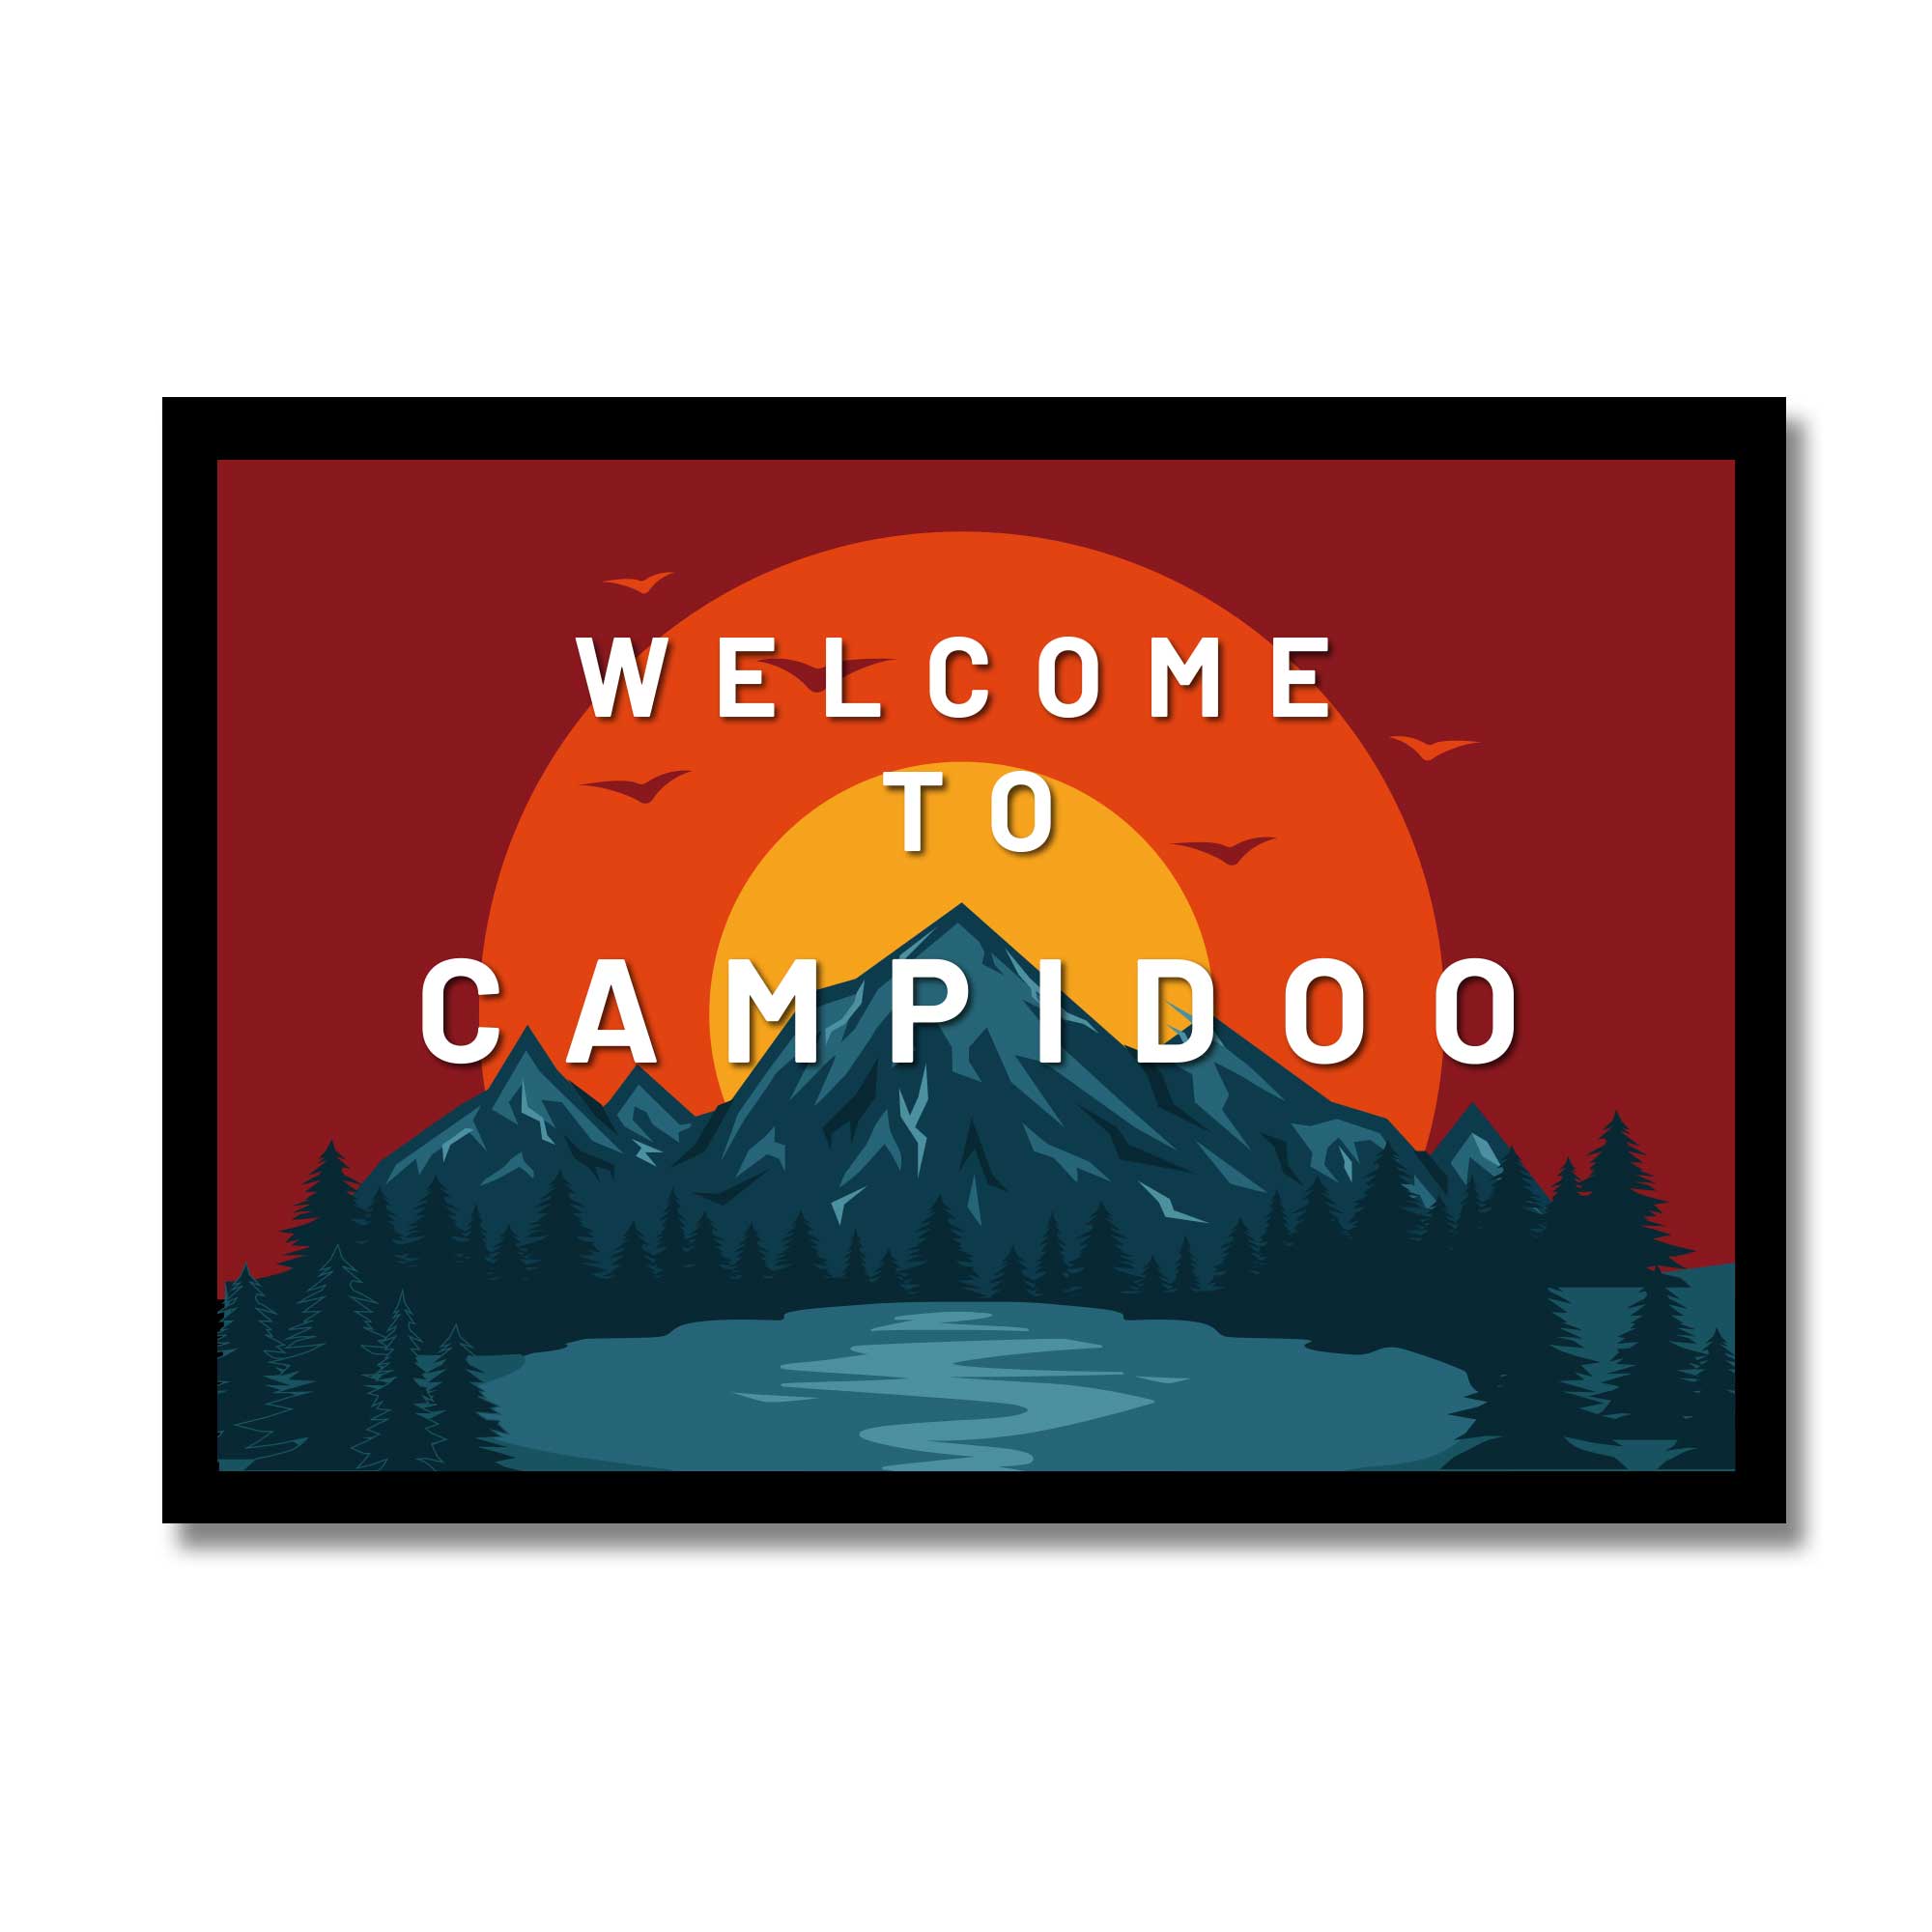 Fussmatte "Welcome to Campidoo" - waschbar